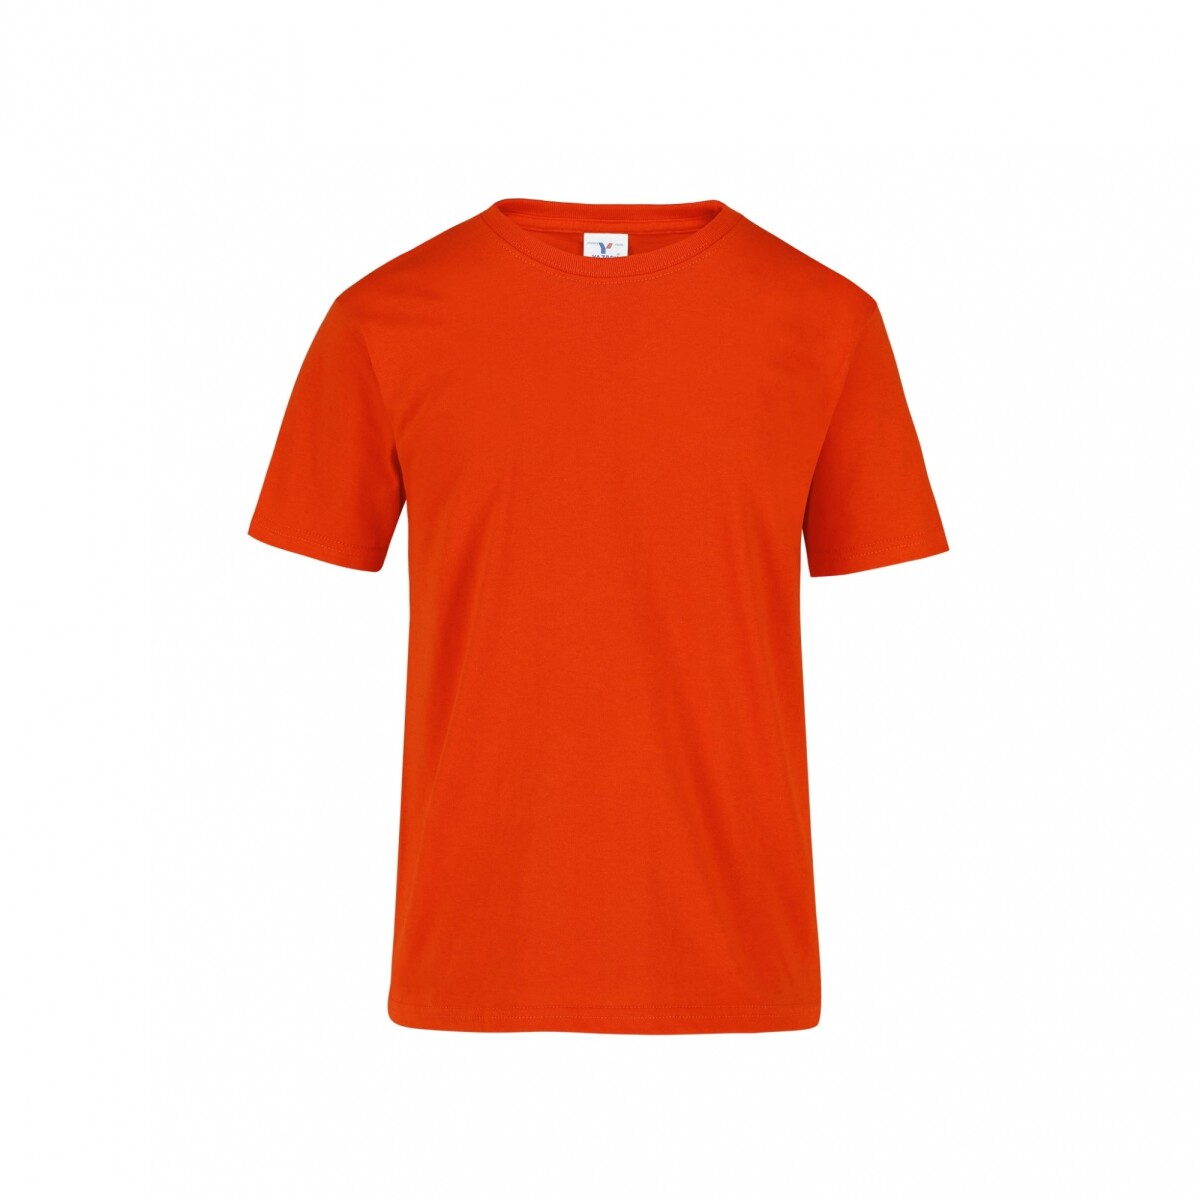 Camiseta a la base joven - Naranja 